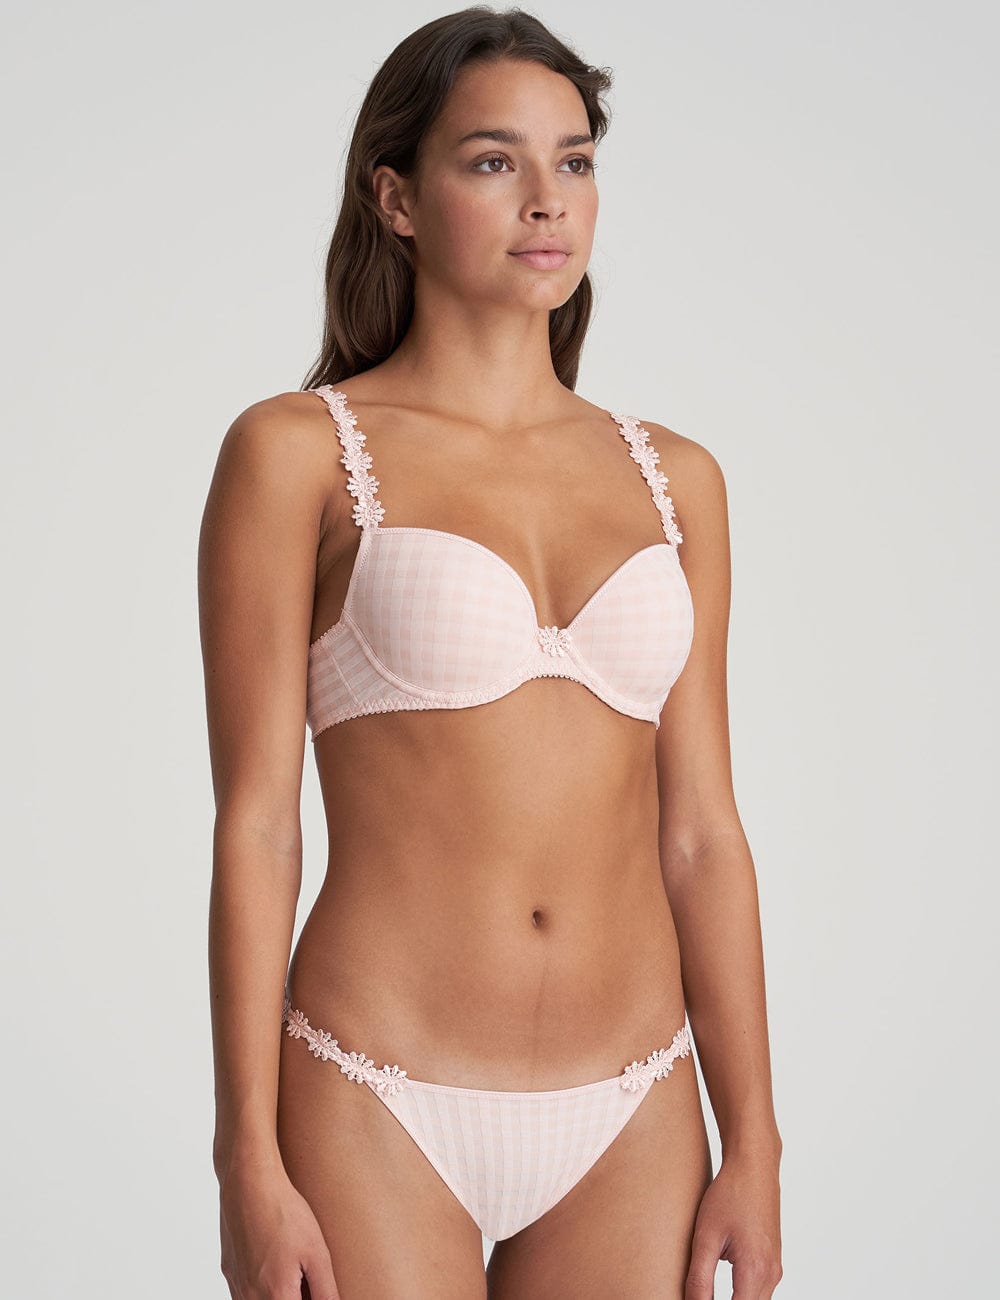 Marie Jo AVERO pearly pink padded bra strapless